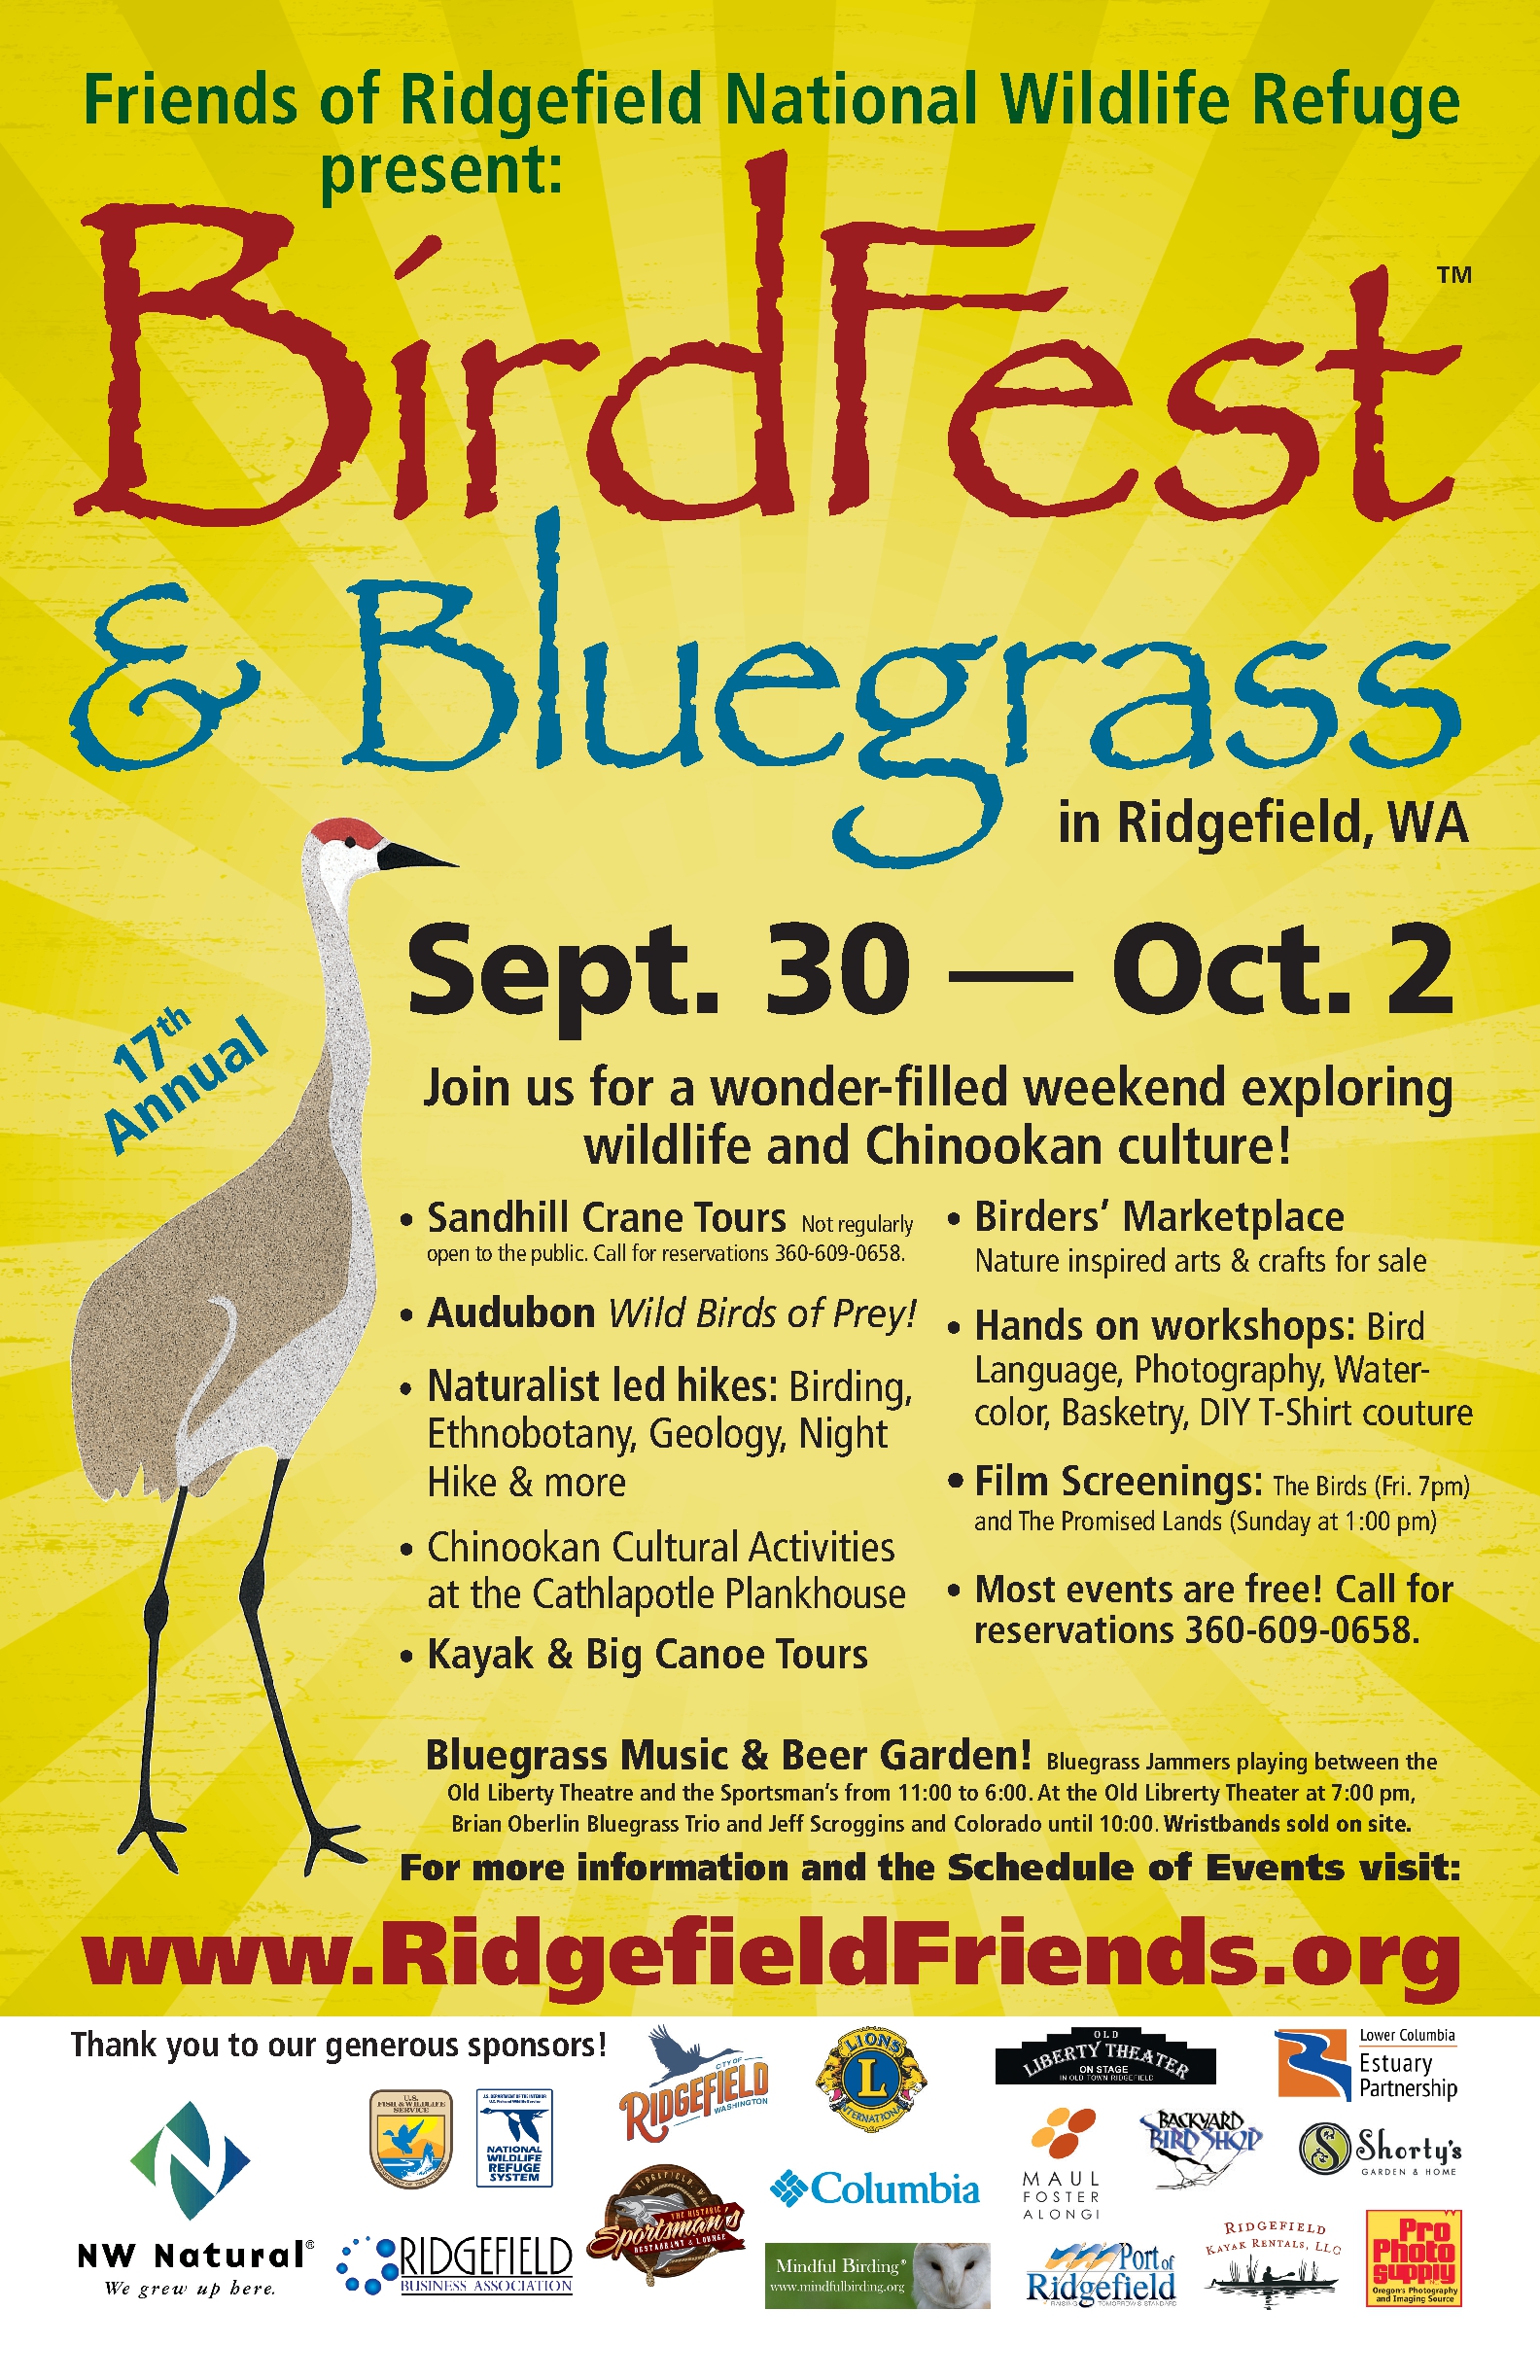 Birdfest & Bluegrass